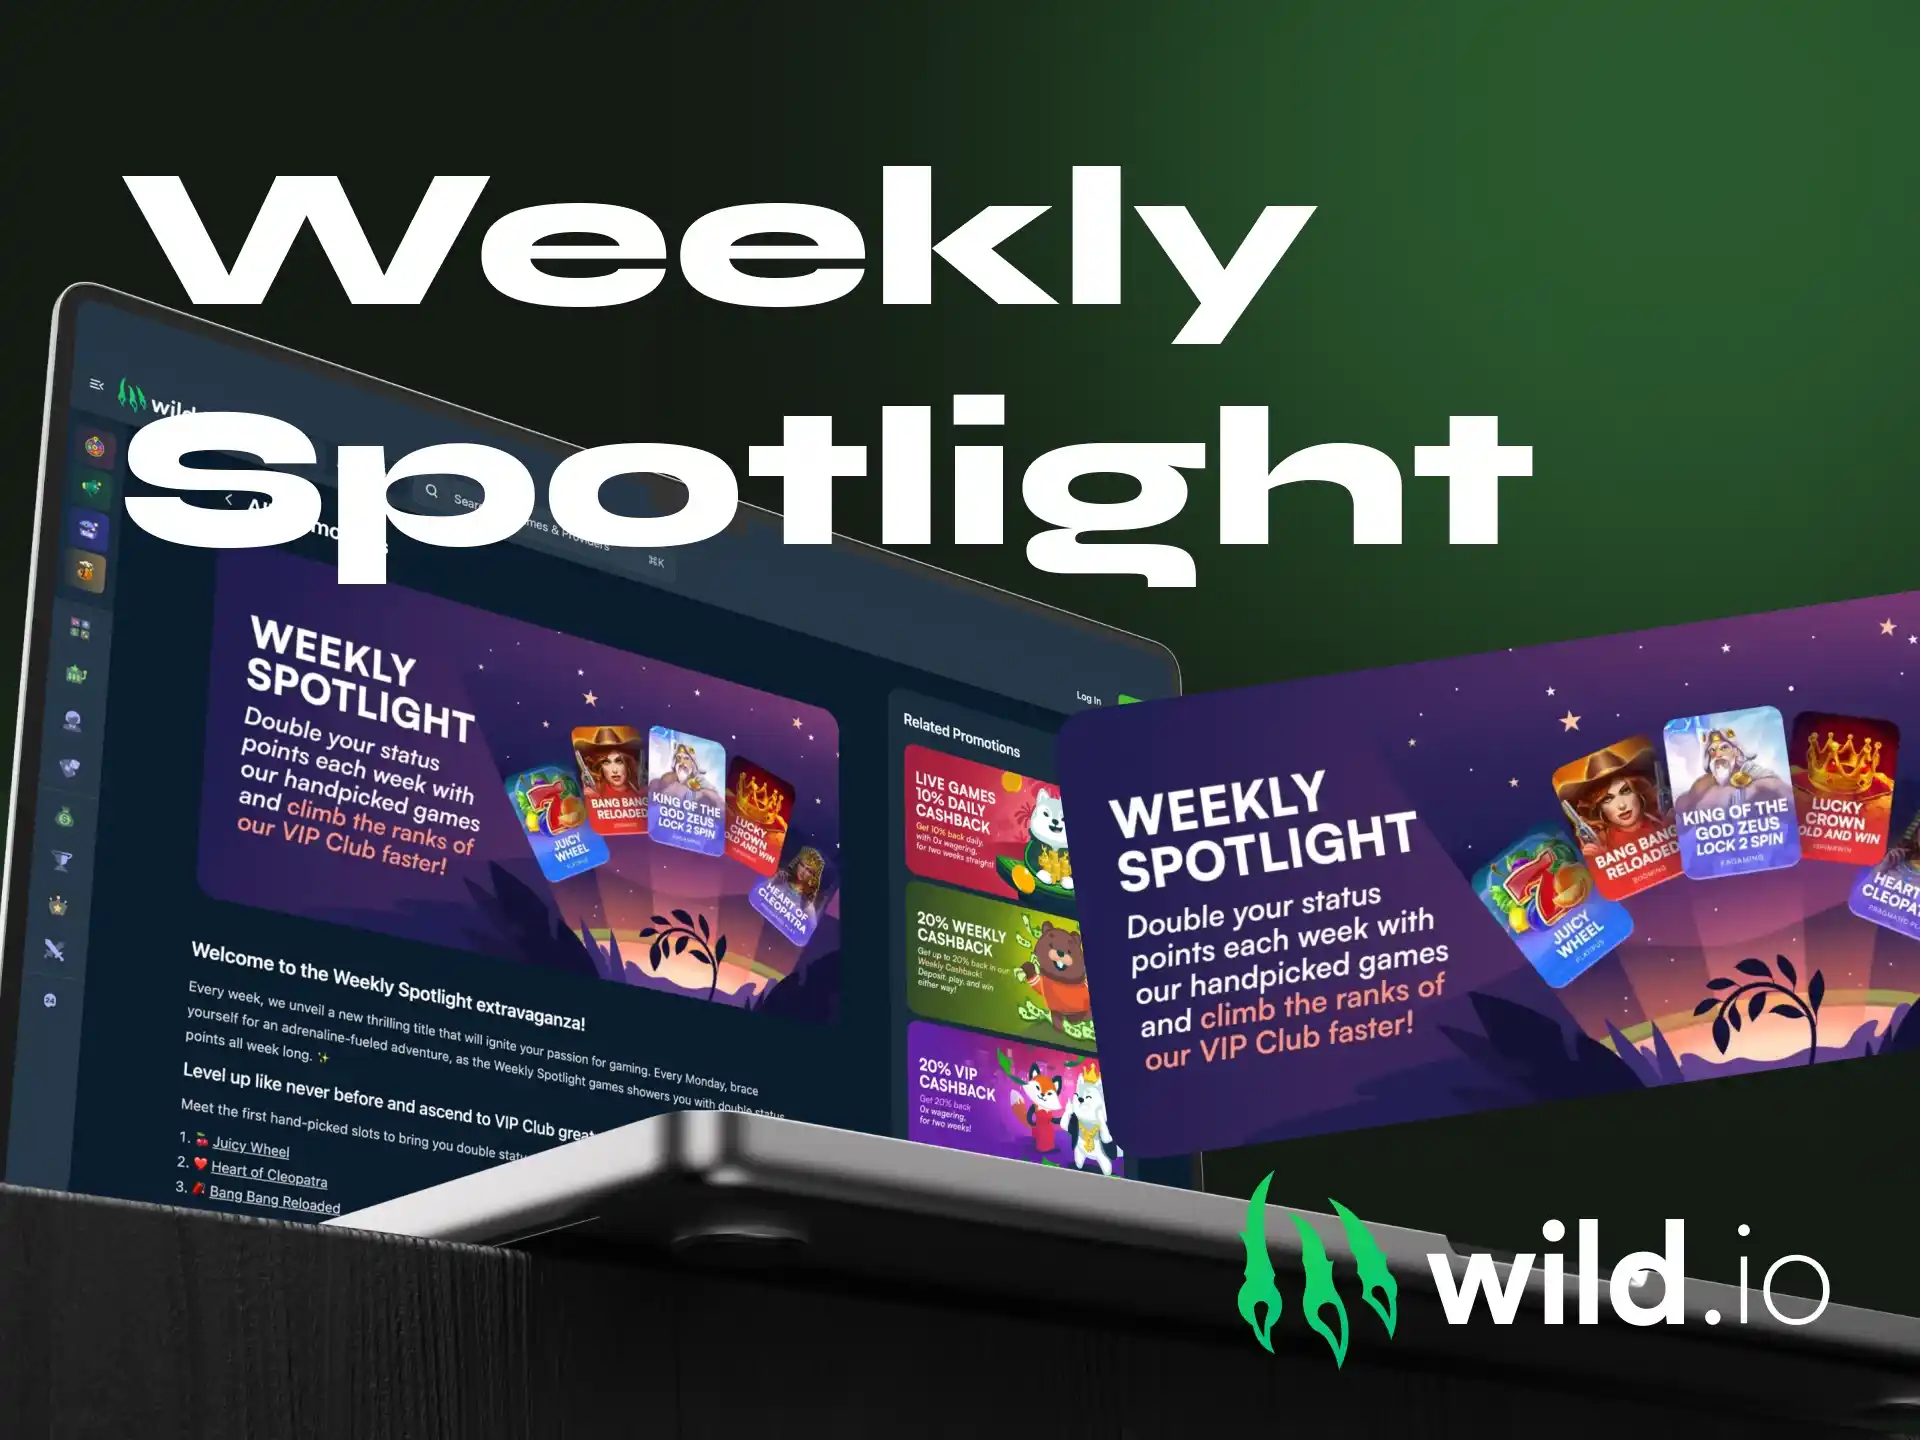 What is the Weekly Spotlight bonus at Wildio online casino.